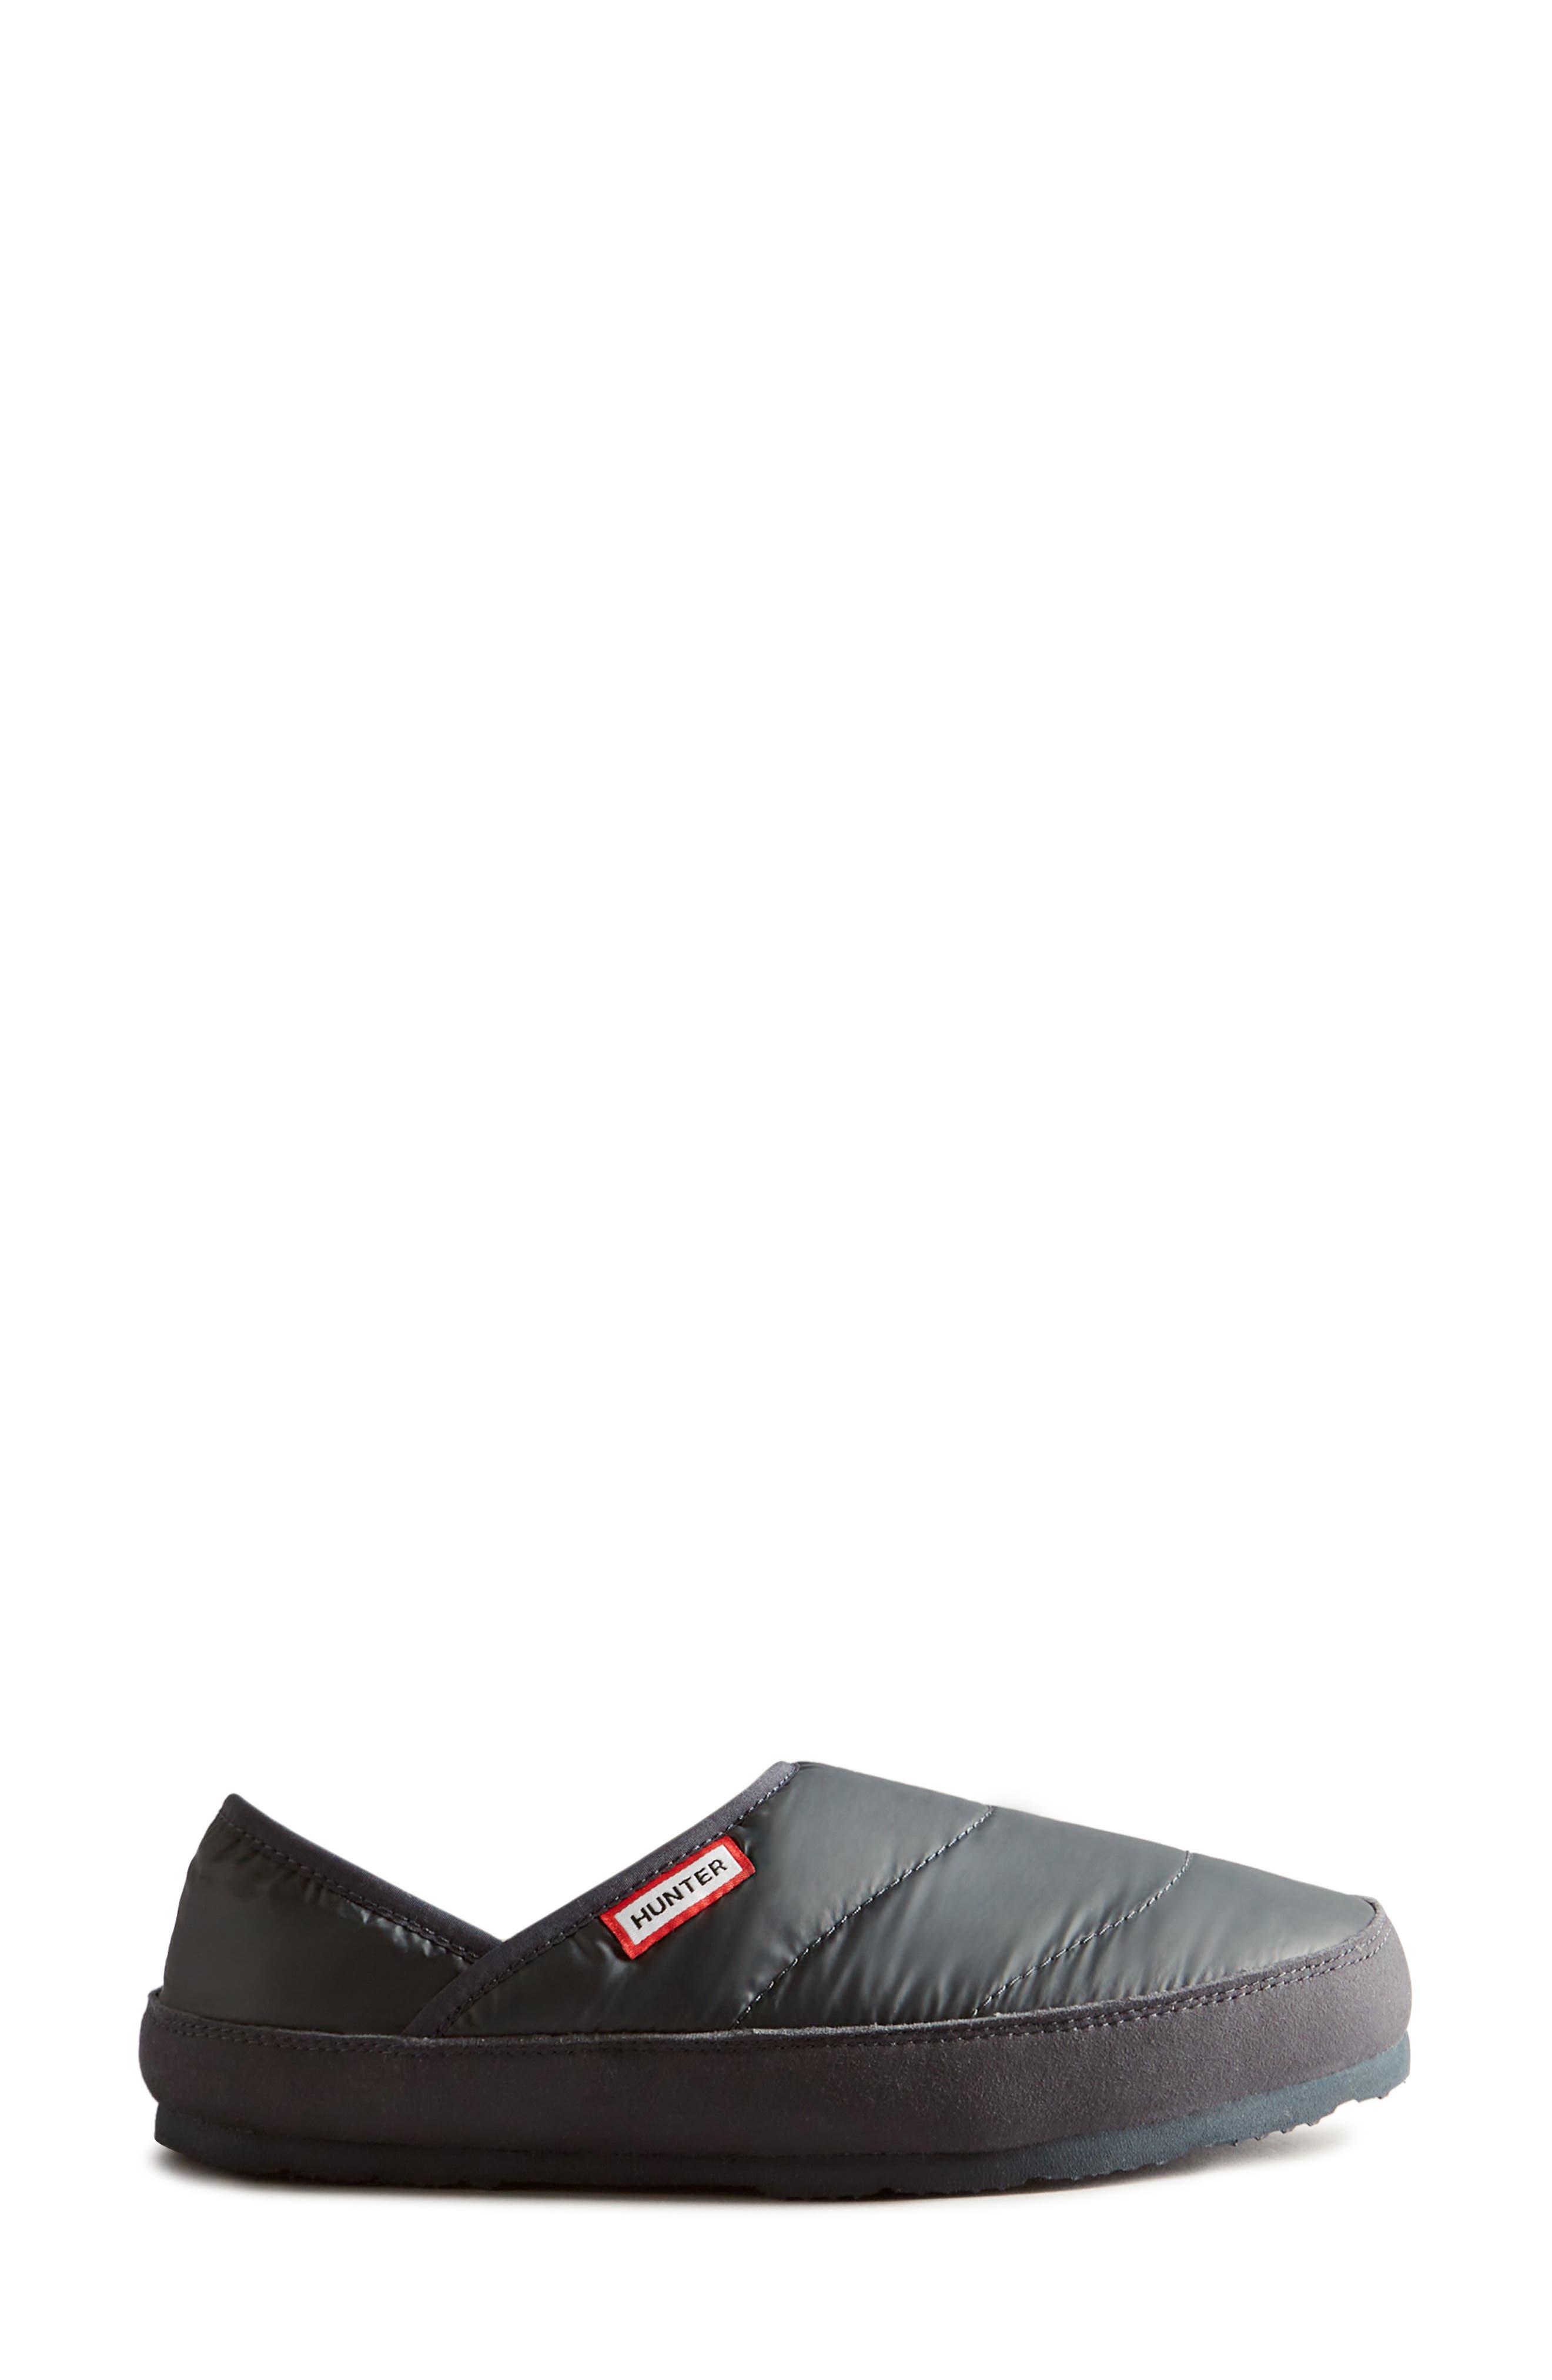 Hunter classic letters logo solid color natural rubber non-slip platform slippers  sandals UK purchasing | Lazada PH